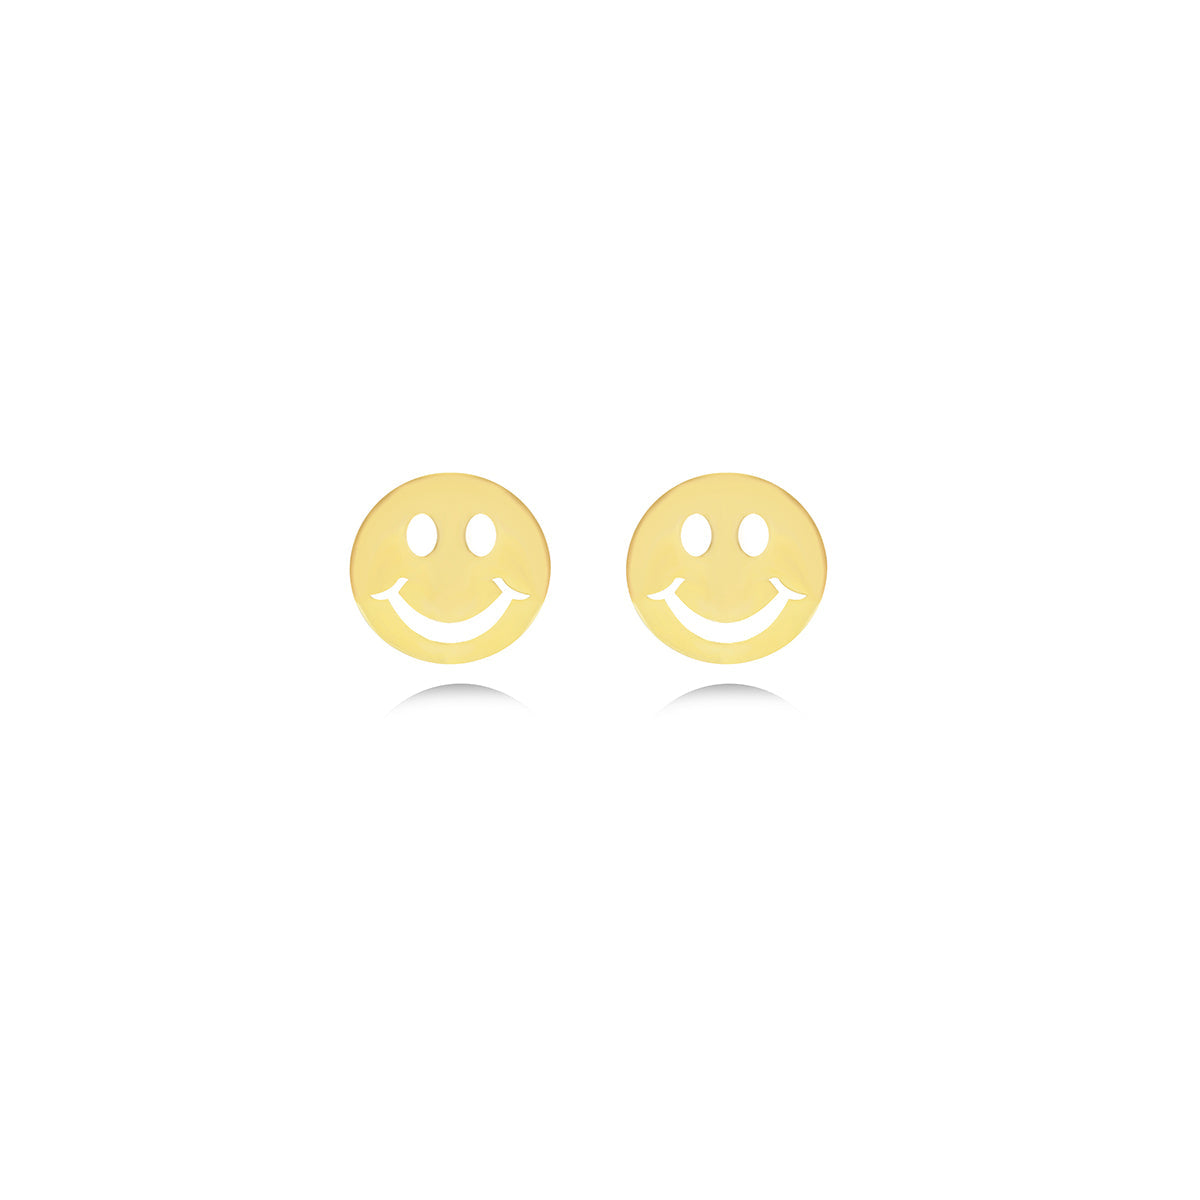 Smiley Face Stud Earrings in 18k Yellow Gold